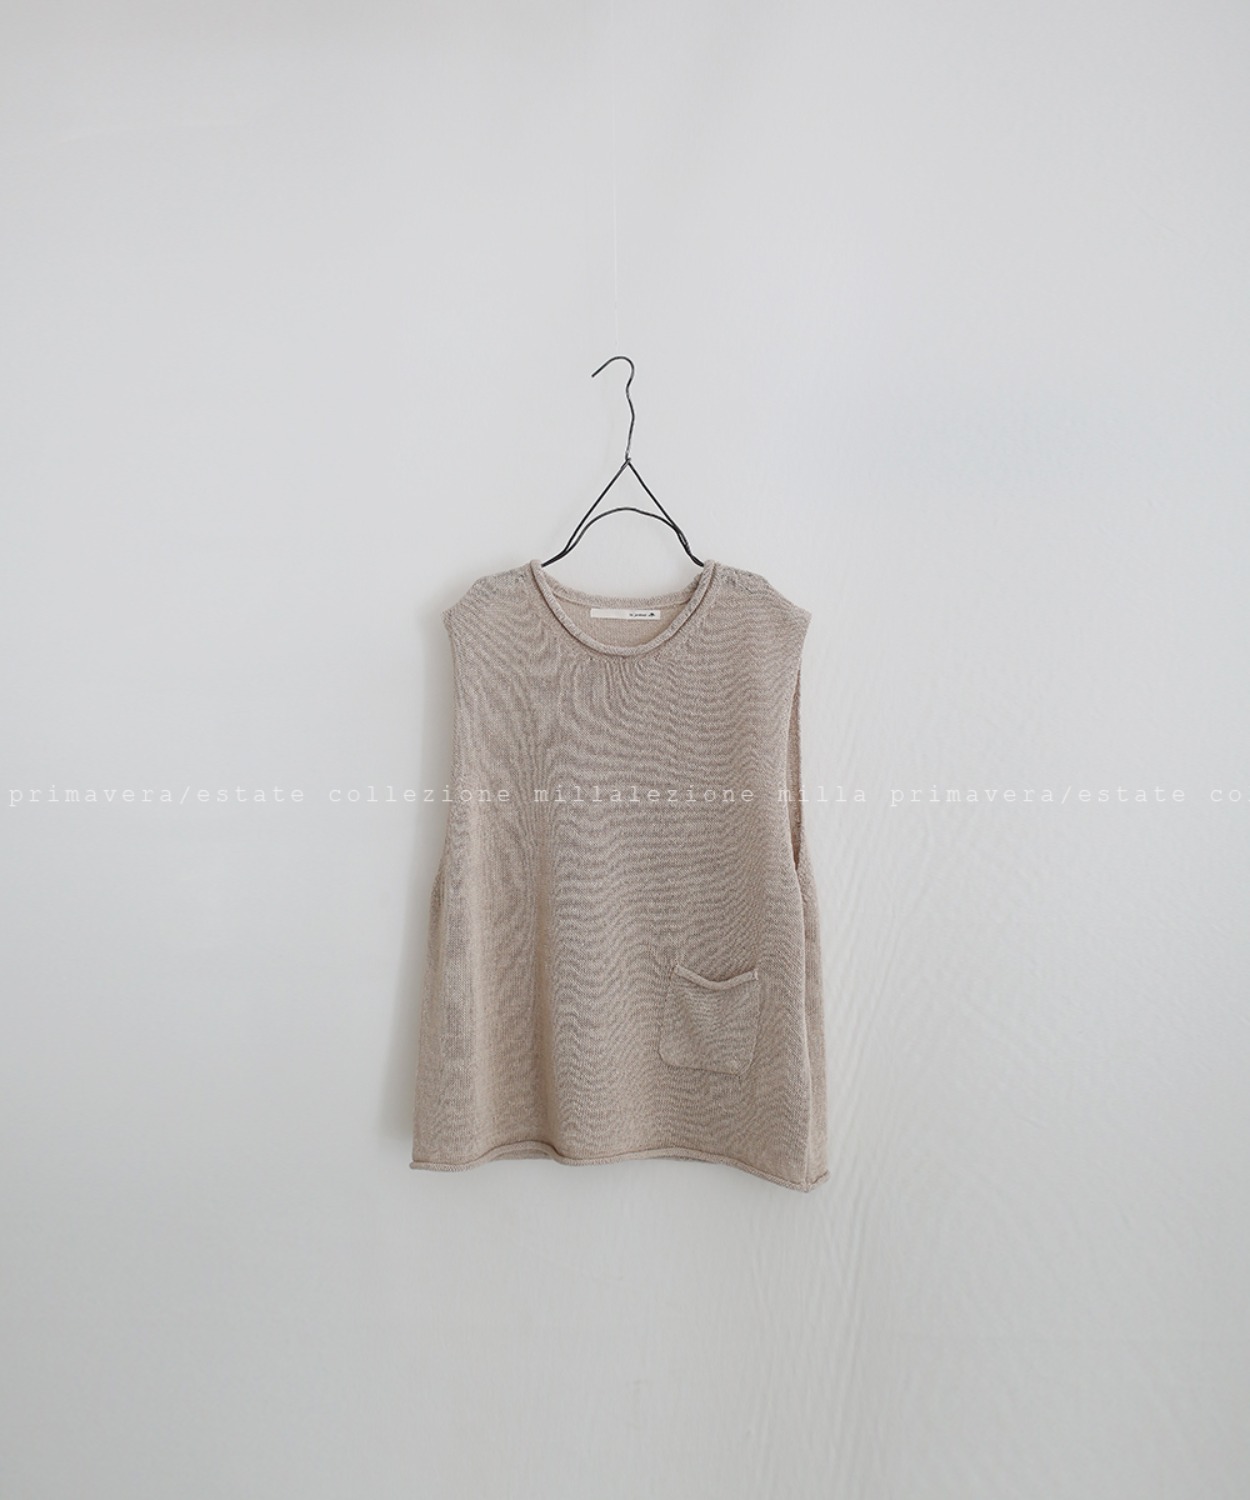 N°005 knits